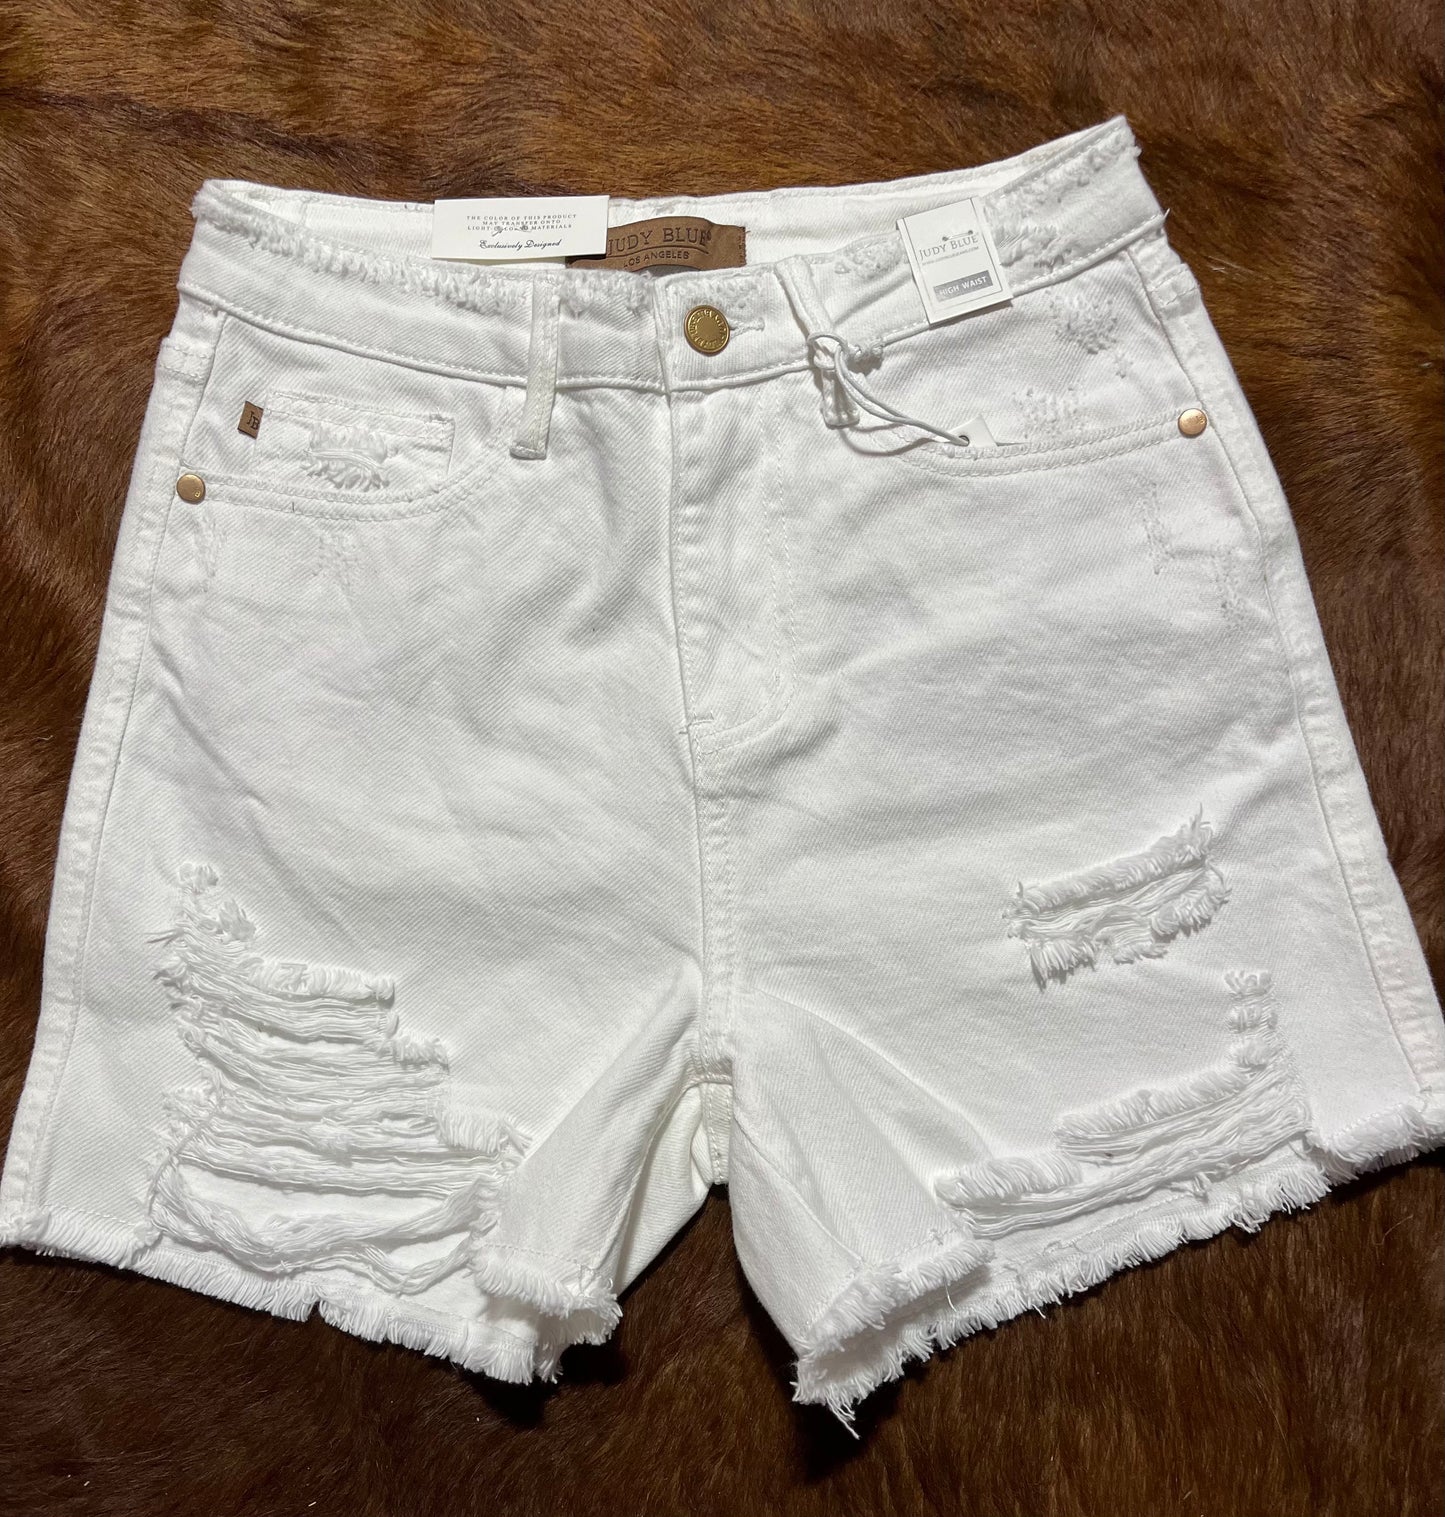 Judy Blue Cozumel White Shorts